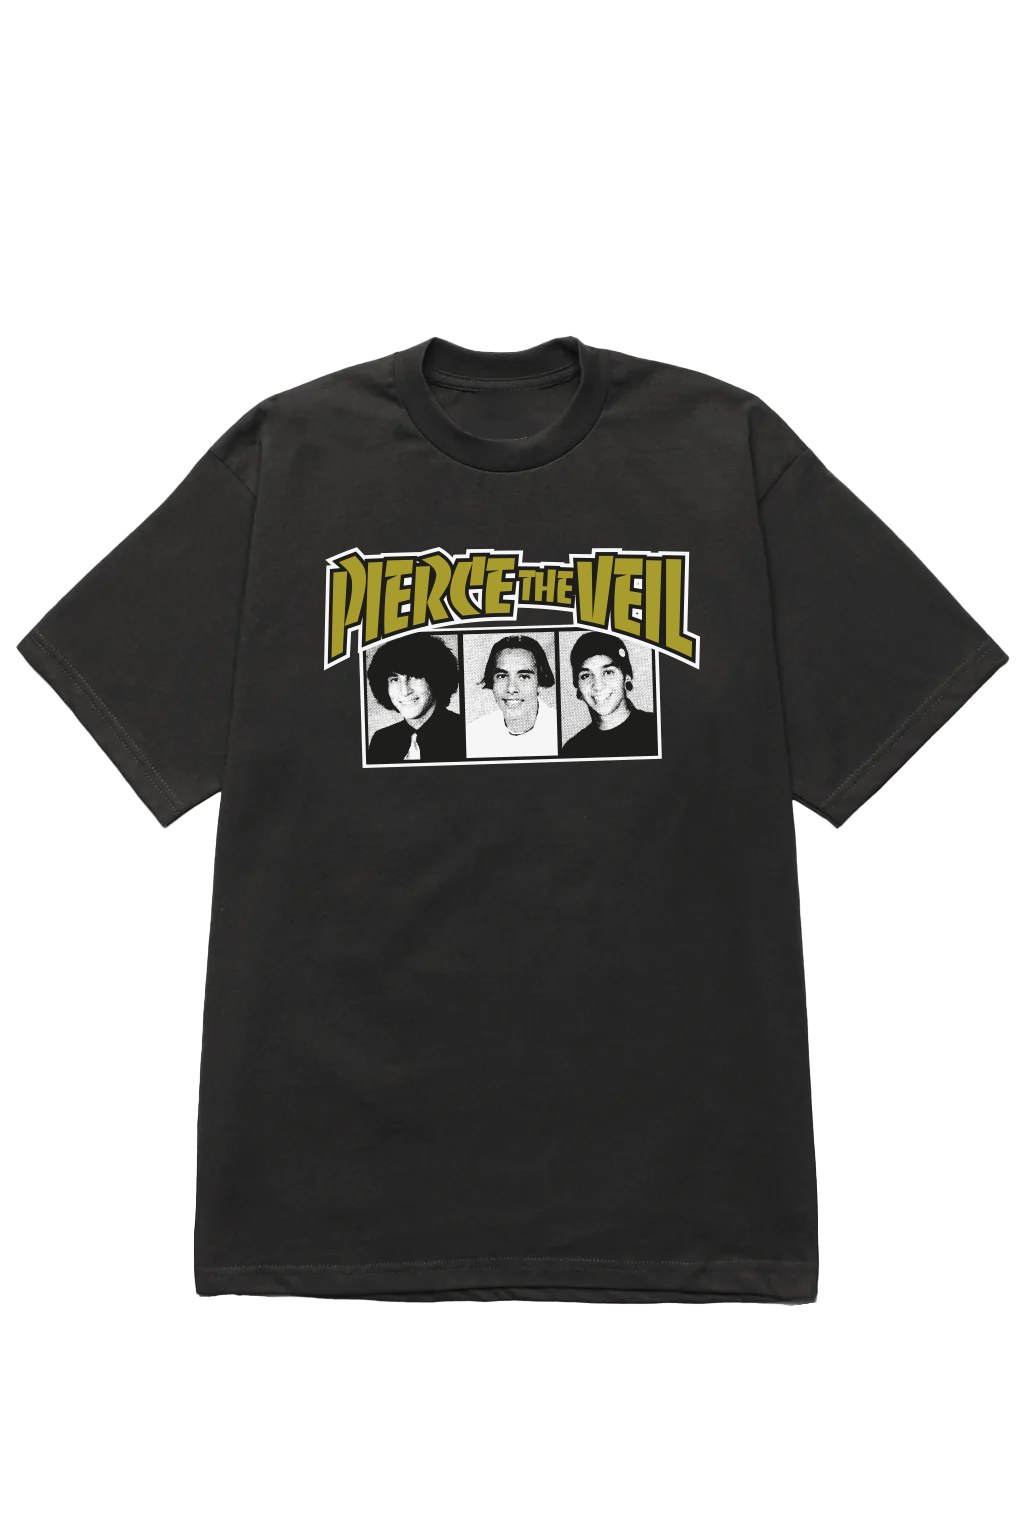 Pierce The Veil X KERRANG! T-shirt- Black